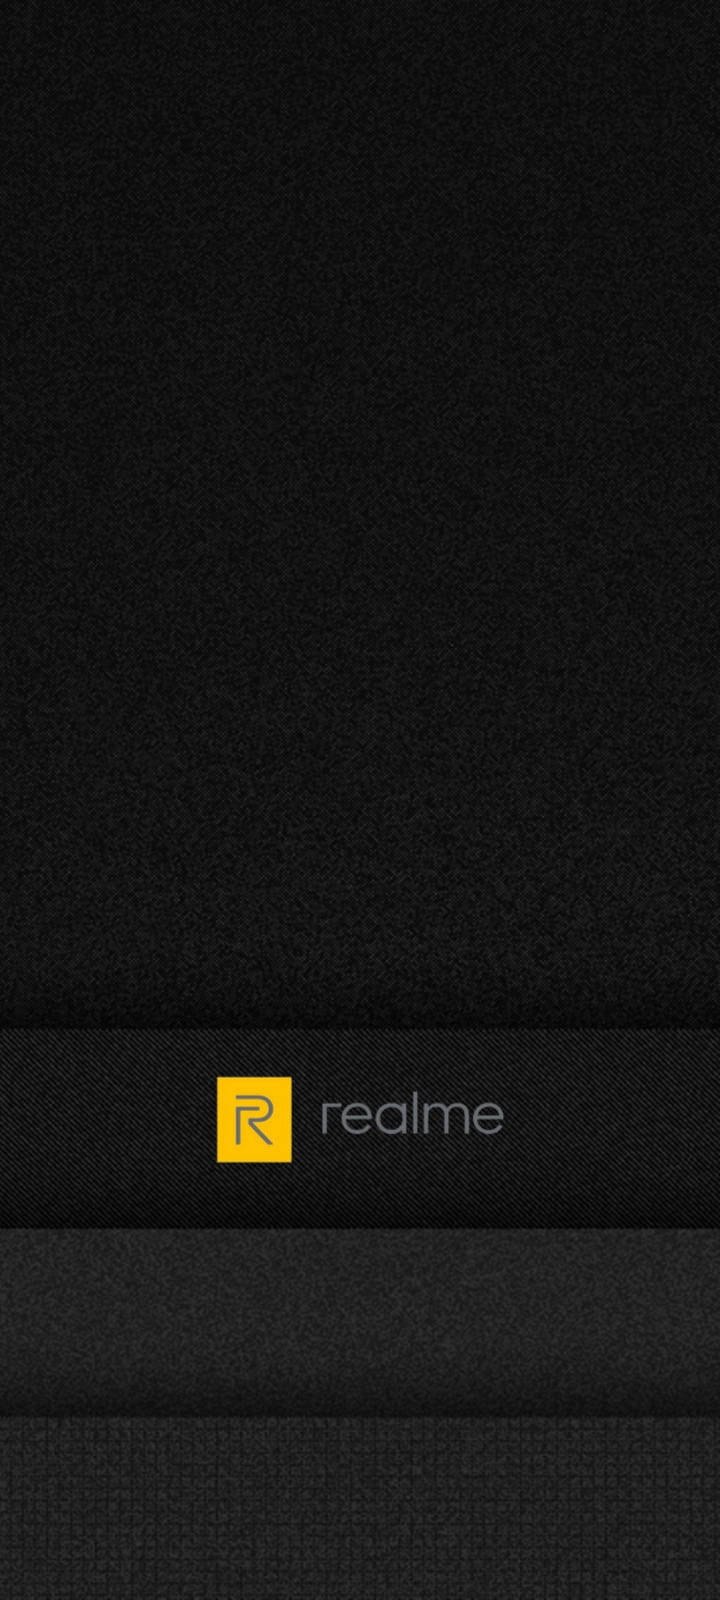 Realme Logo Black And Gray Wallpaper